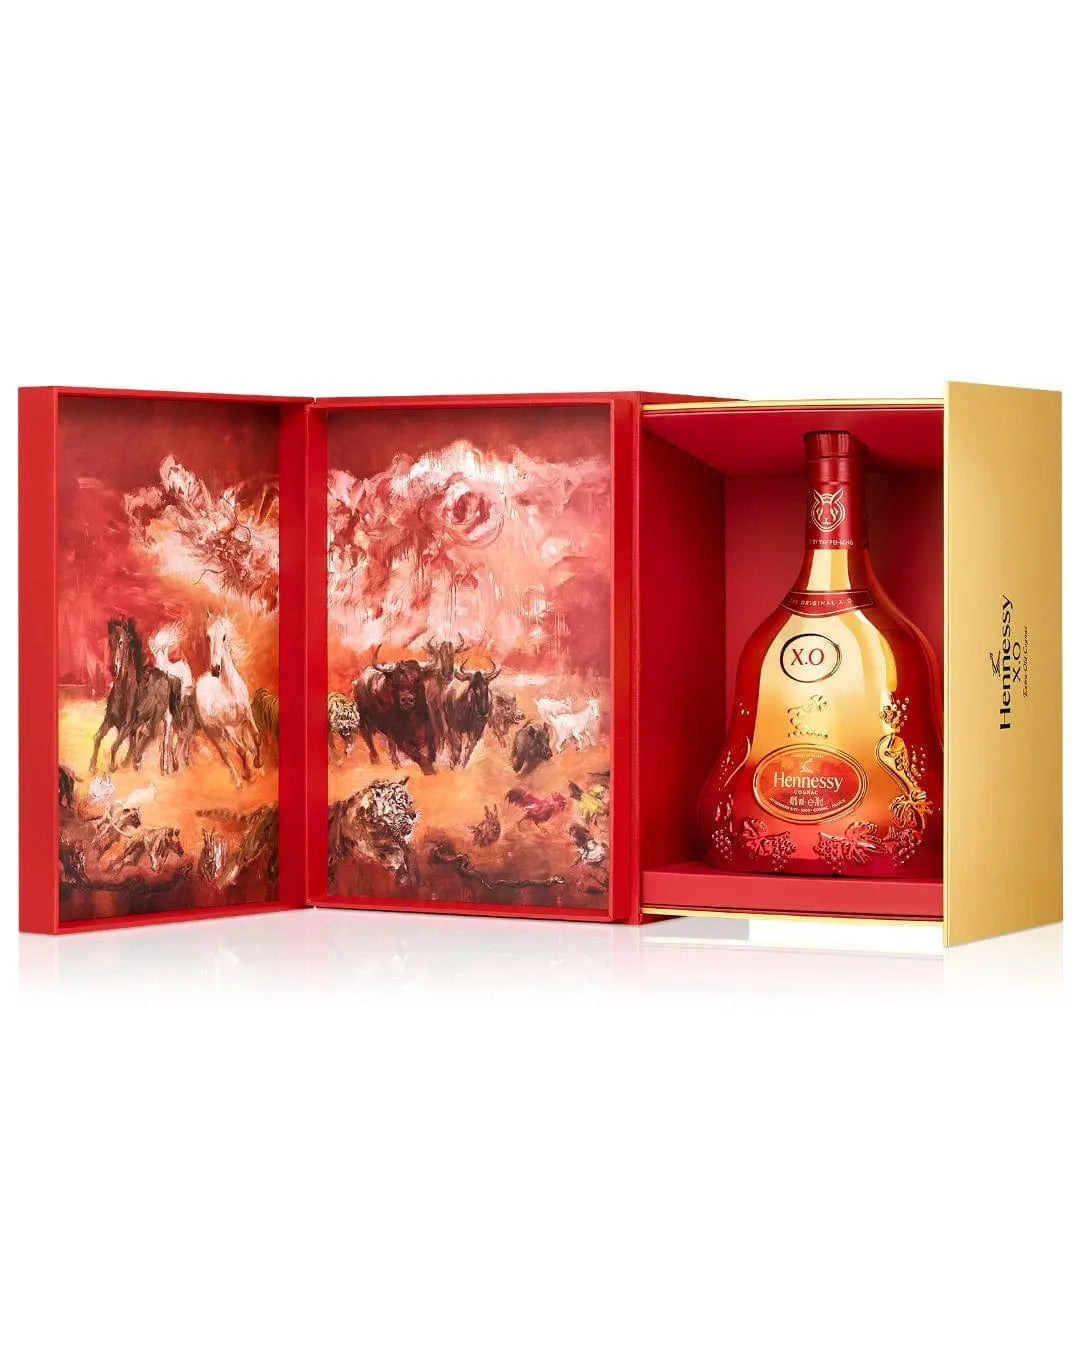 Catalog :: Cognac & Brandy :: Cognac :: Hennessy XO Cognac